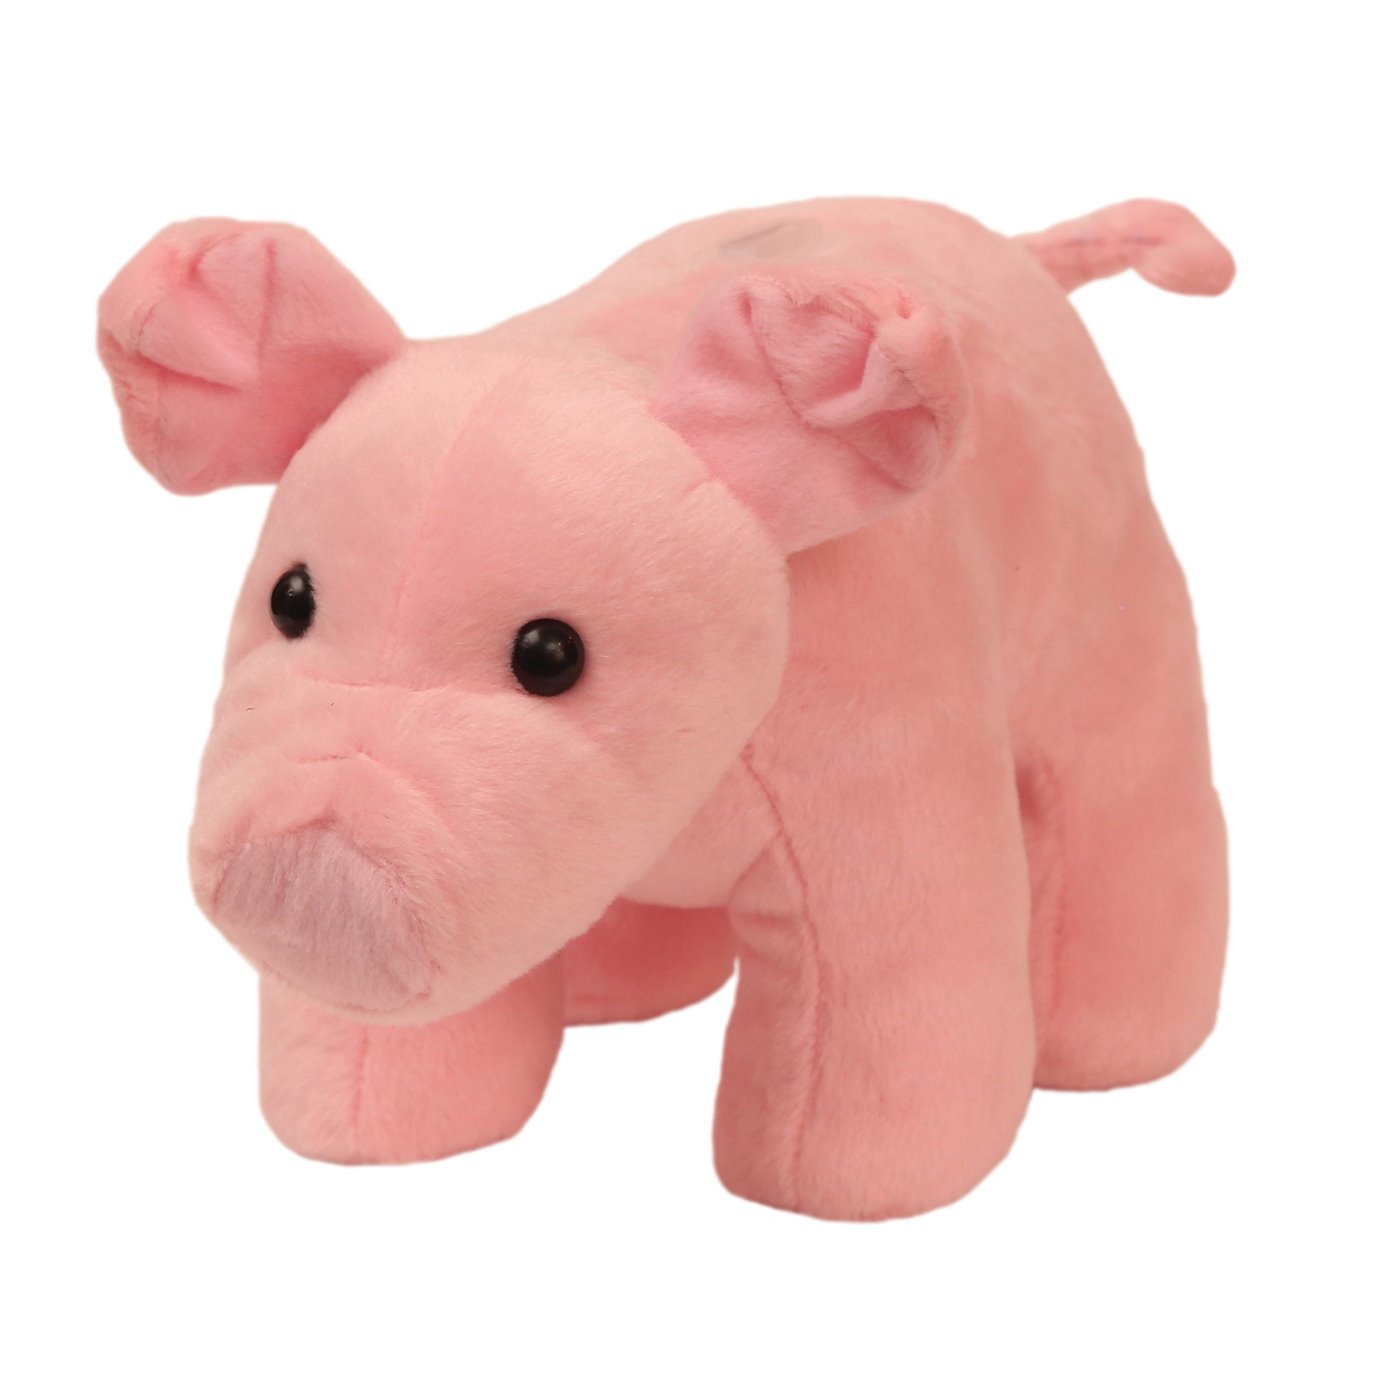 Carstens Plush Pig Coin Piggy Bank